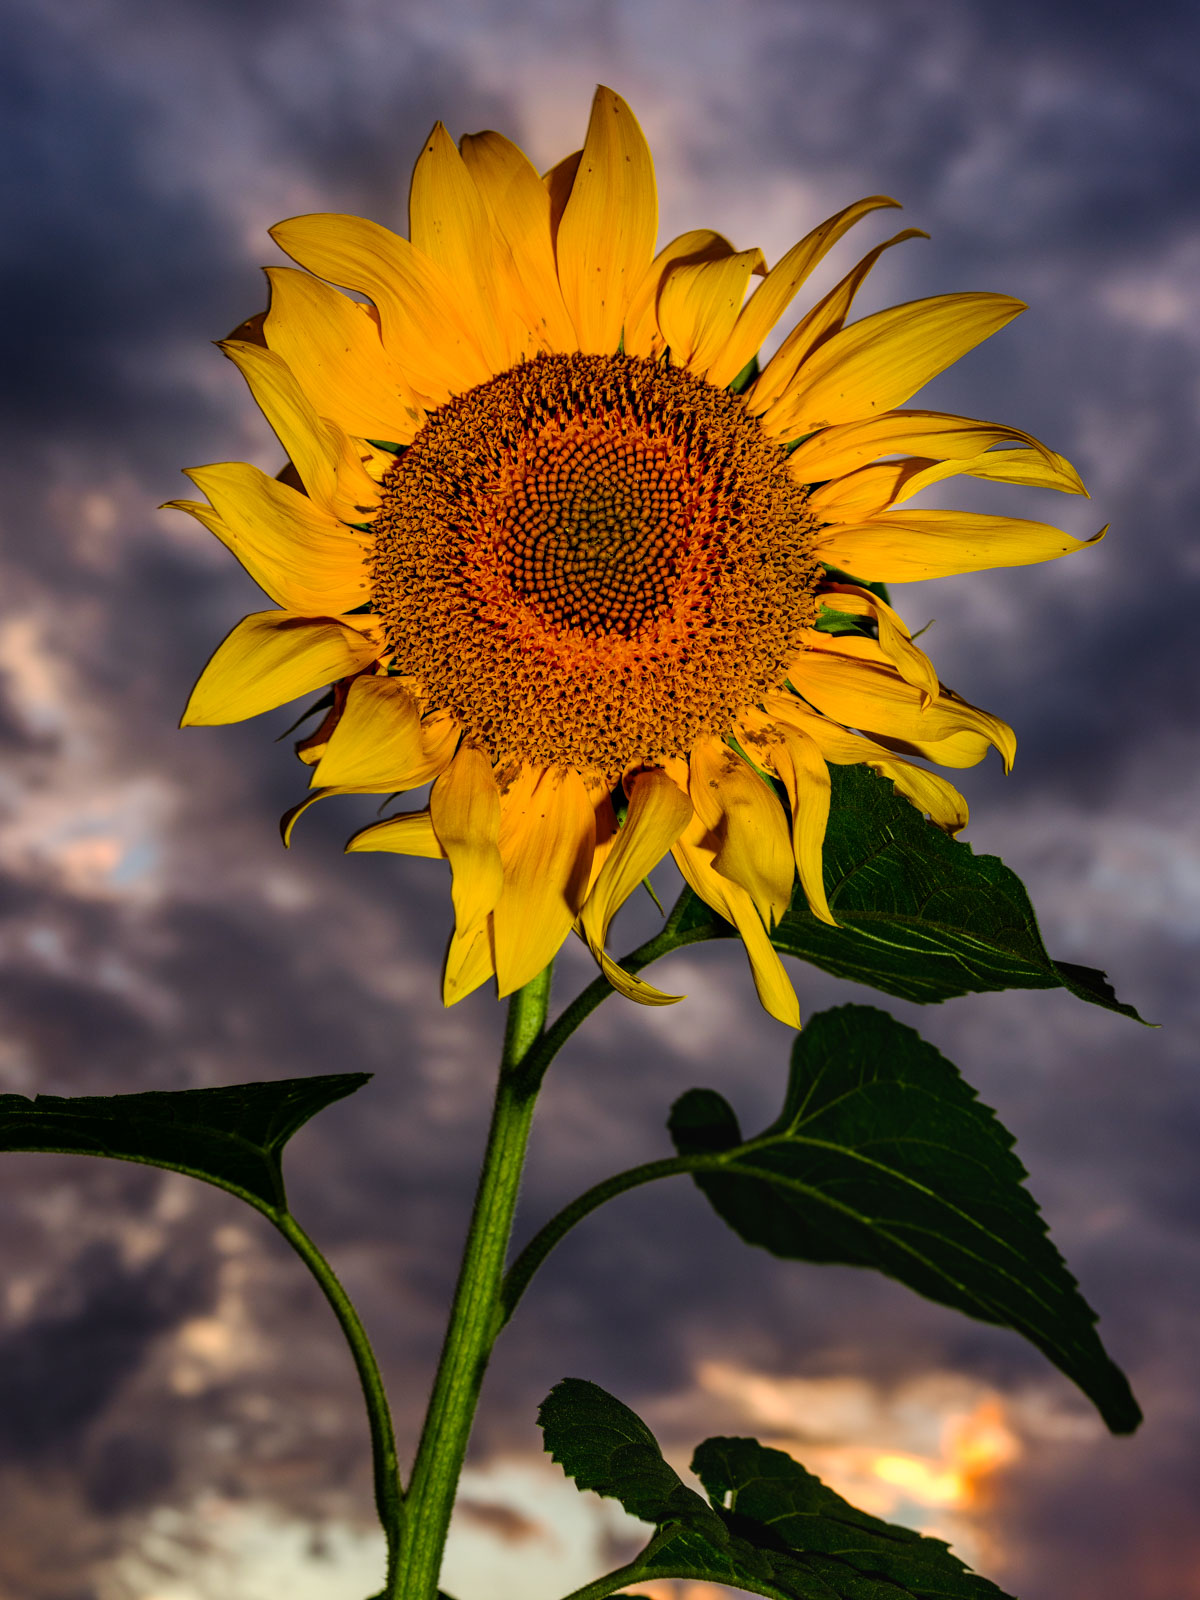 Sunflower flash fun on August 21, 2020 (Bielefeld, Germany).